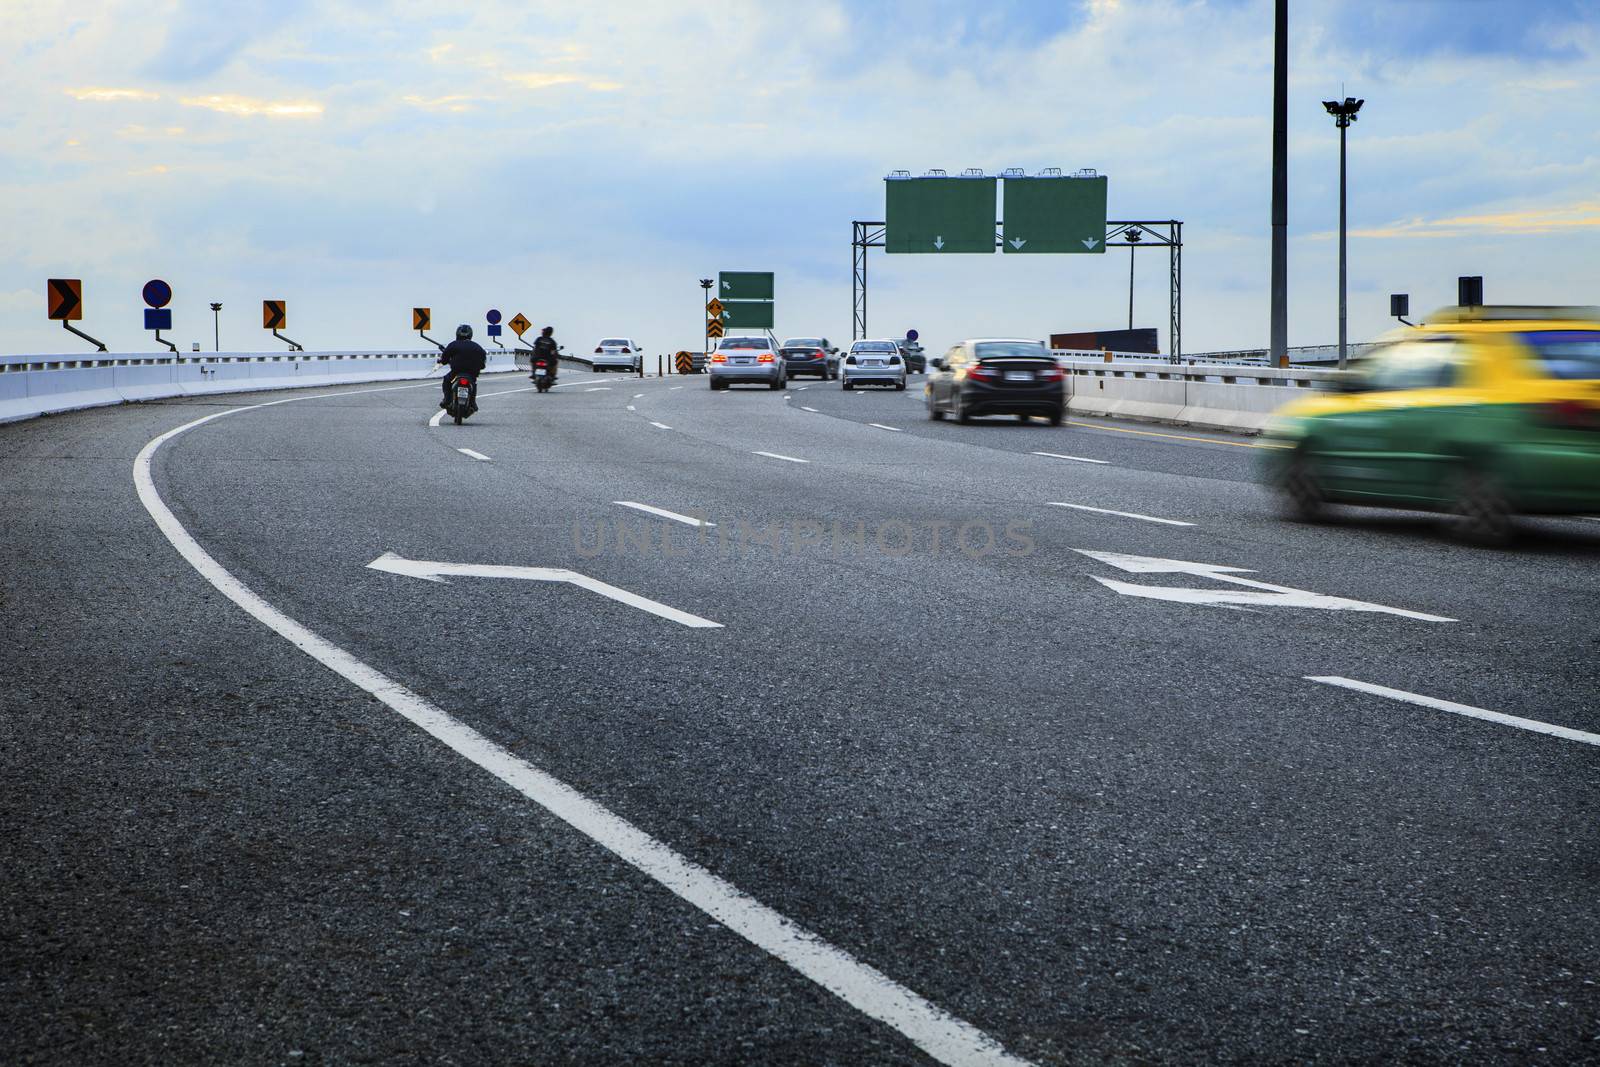 moving passenger car and motorcycle on bridge way crossing junct by khunaspix